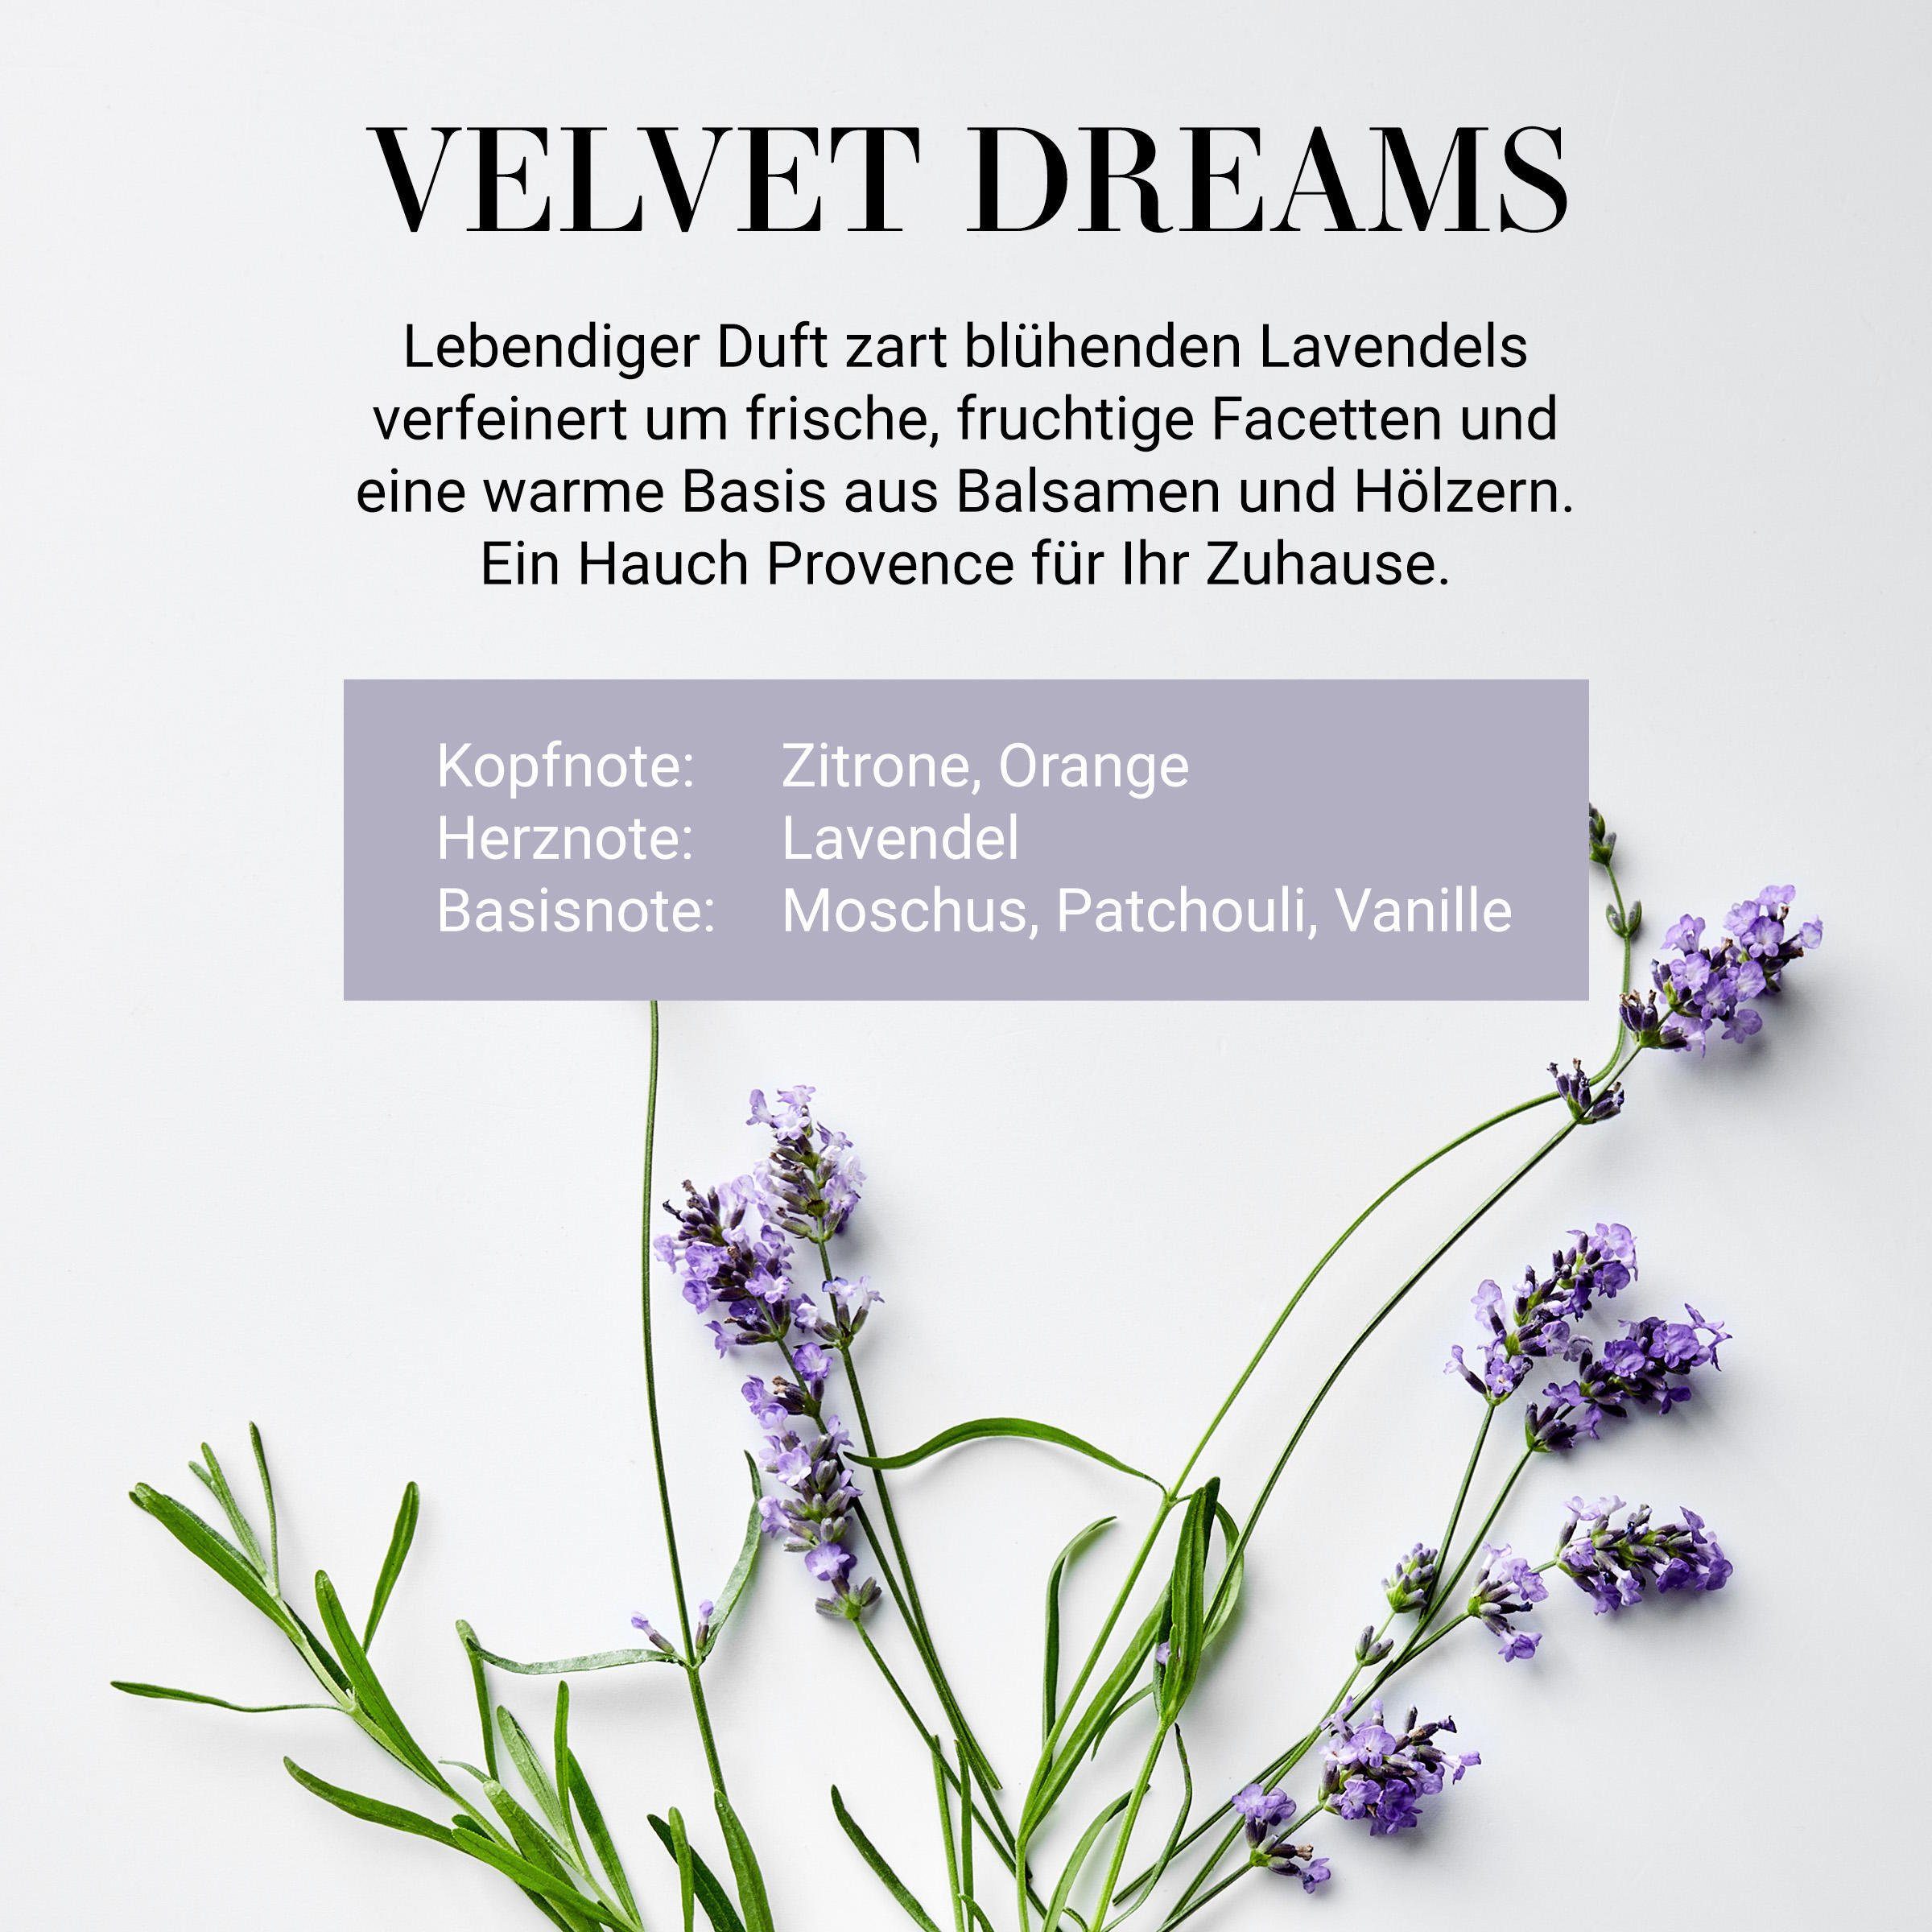 No 10ml ESSENCE Duftlampe Duftöl BUTLERS Dreams" 3 "Velvet